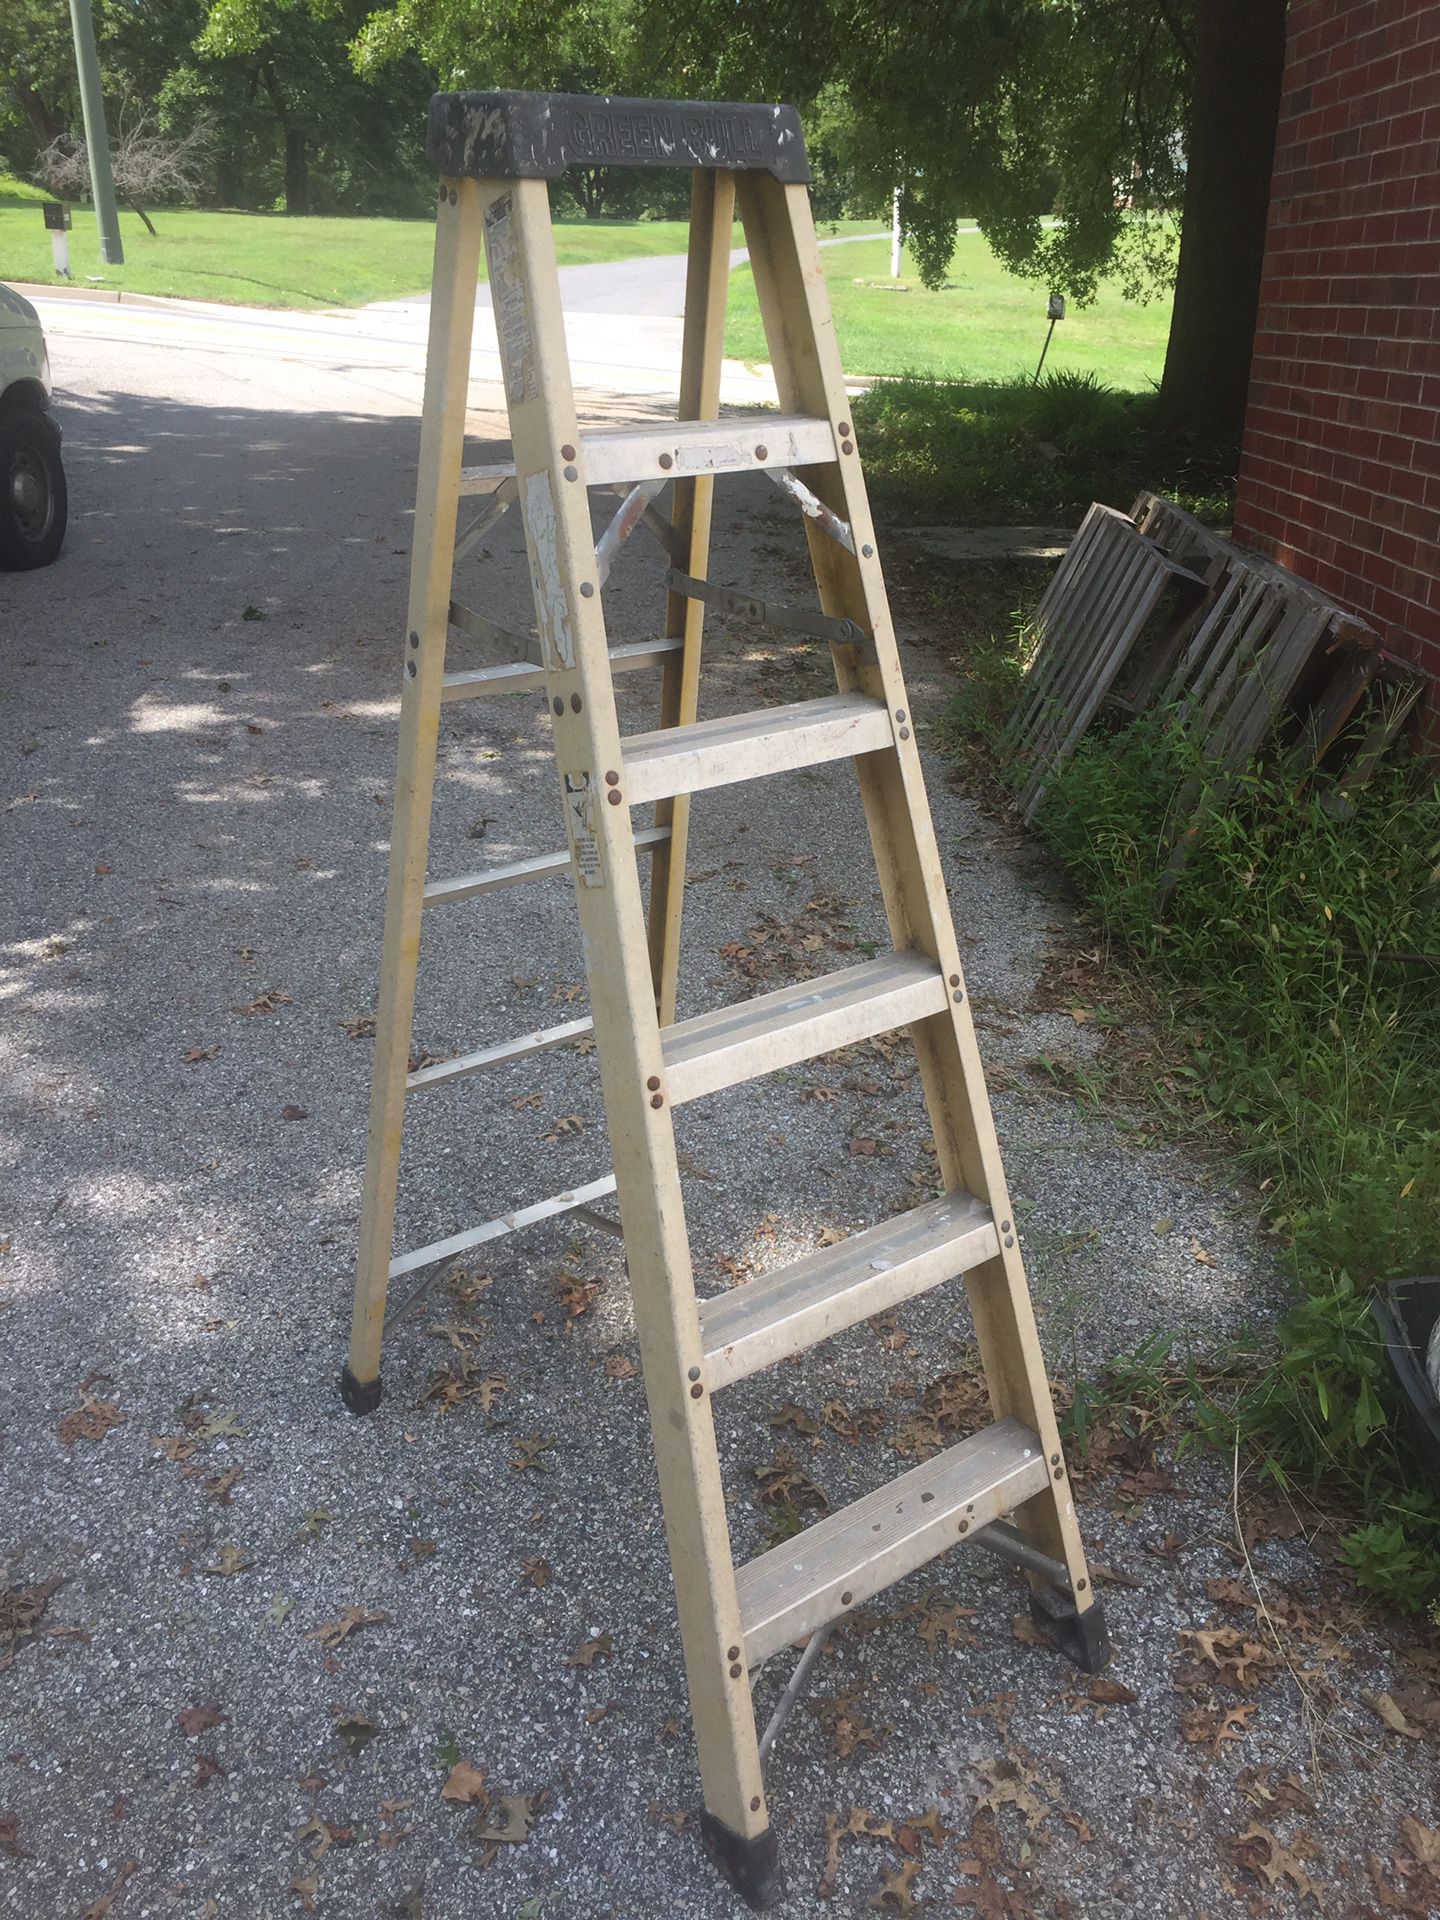 5’ Ladder $40